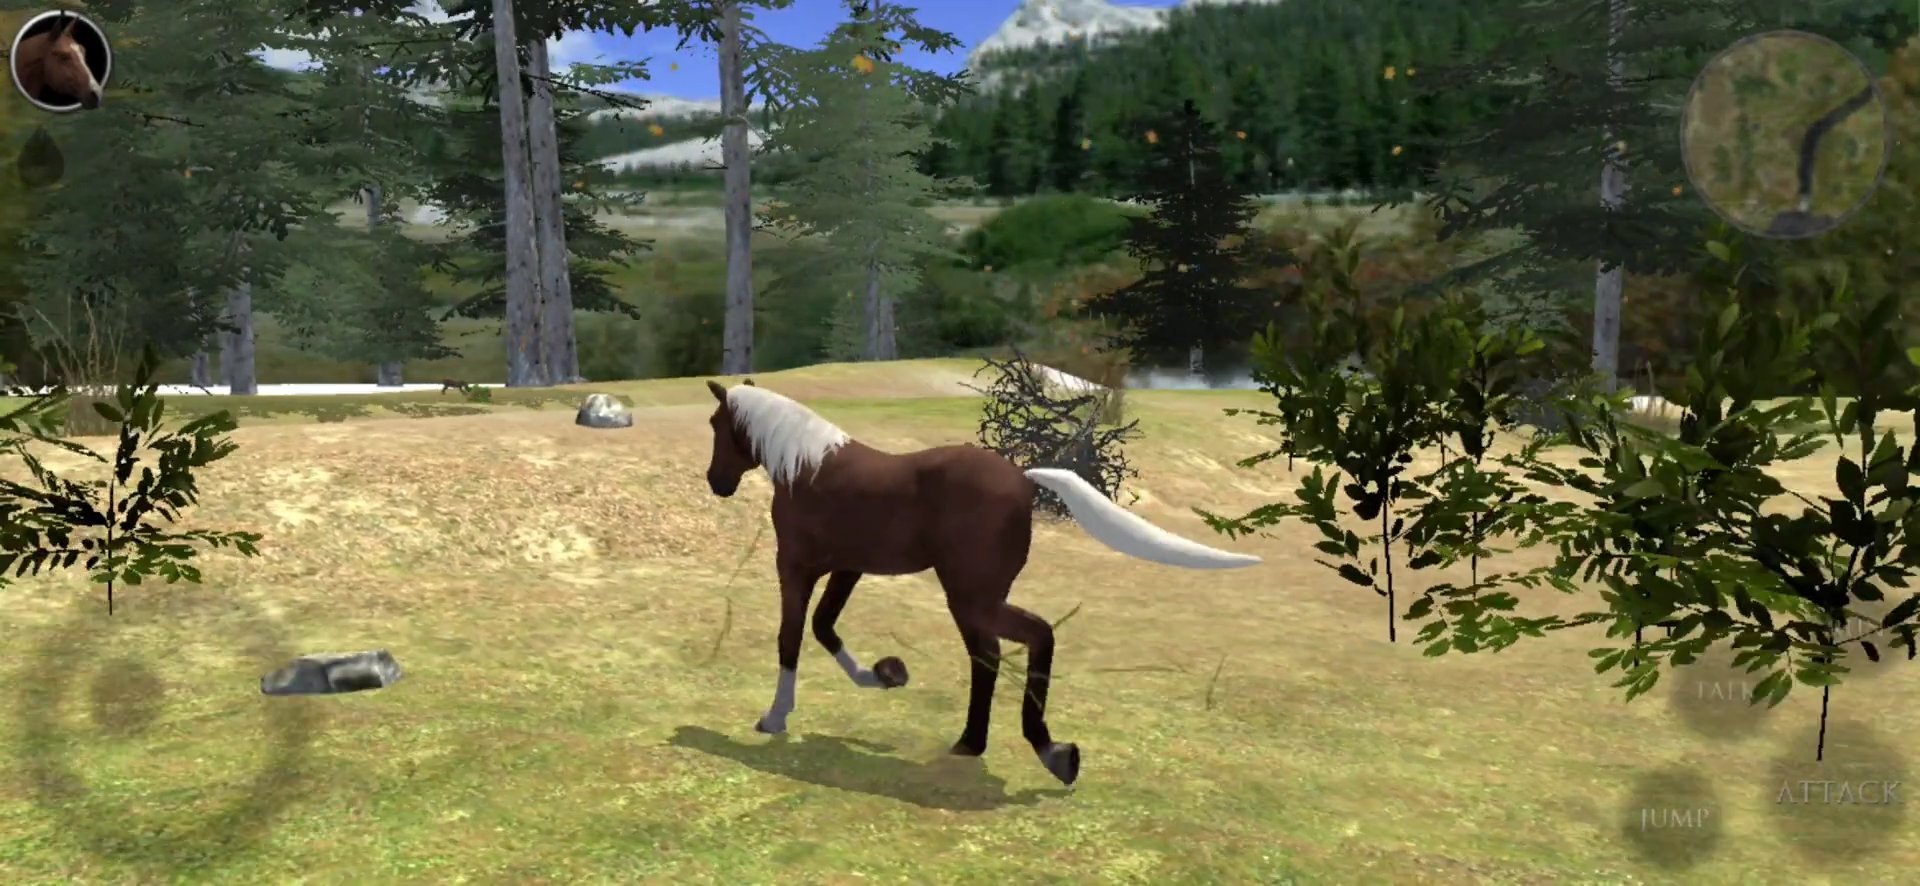 Horse life 2. Ультимейт лошадь симулятор. Ультимейт лошадь симулятор 2. Симулятор лошади 3д. Ультимейт ферма симулятор лошадь.